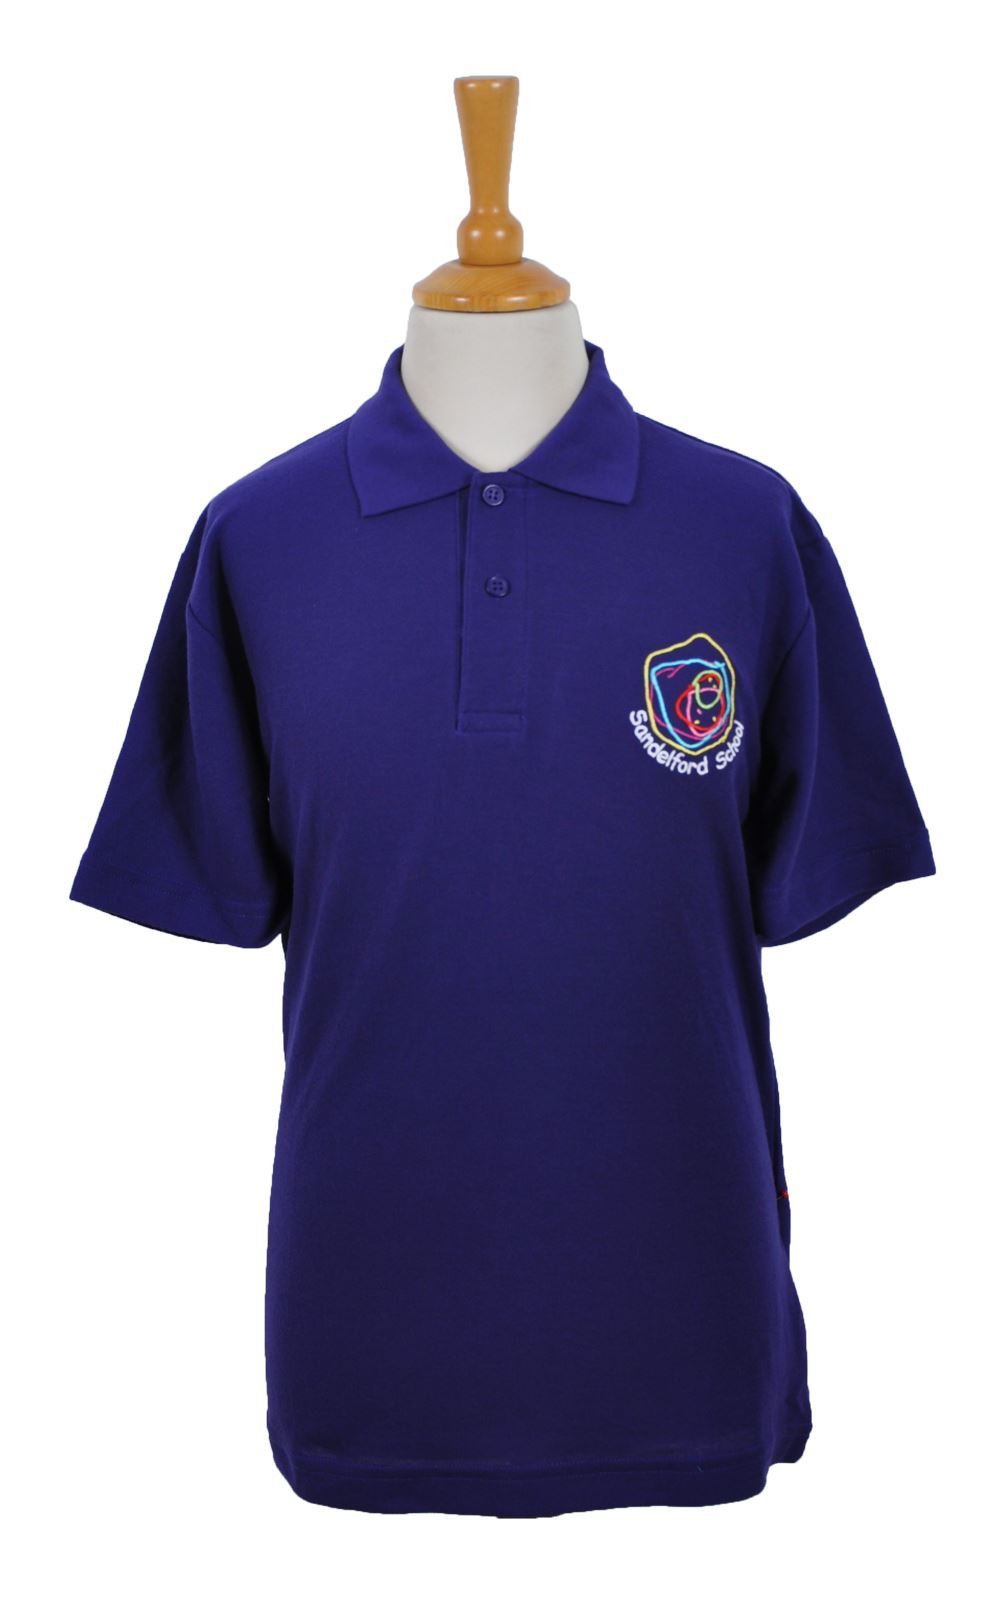 Picture of Sandelford School Purple Polo Shirt - Woodbank